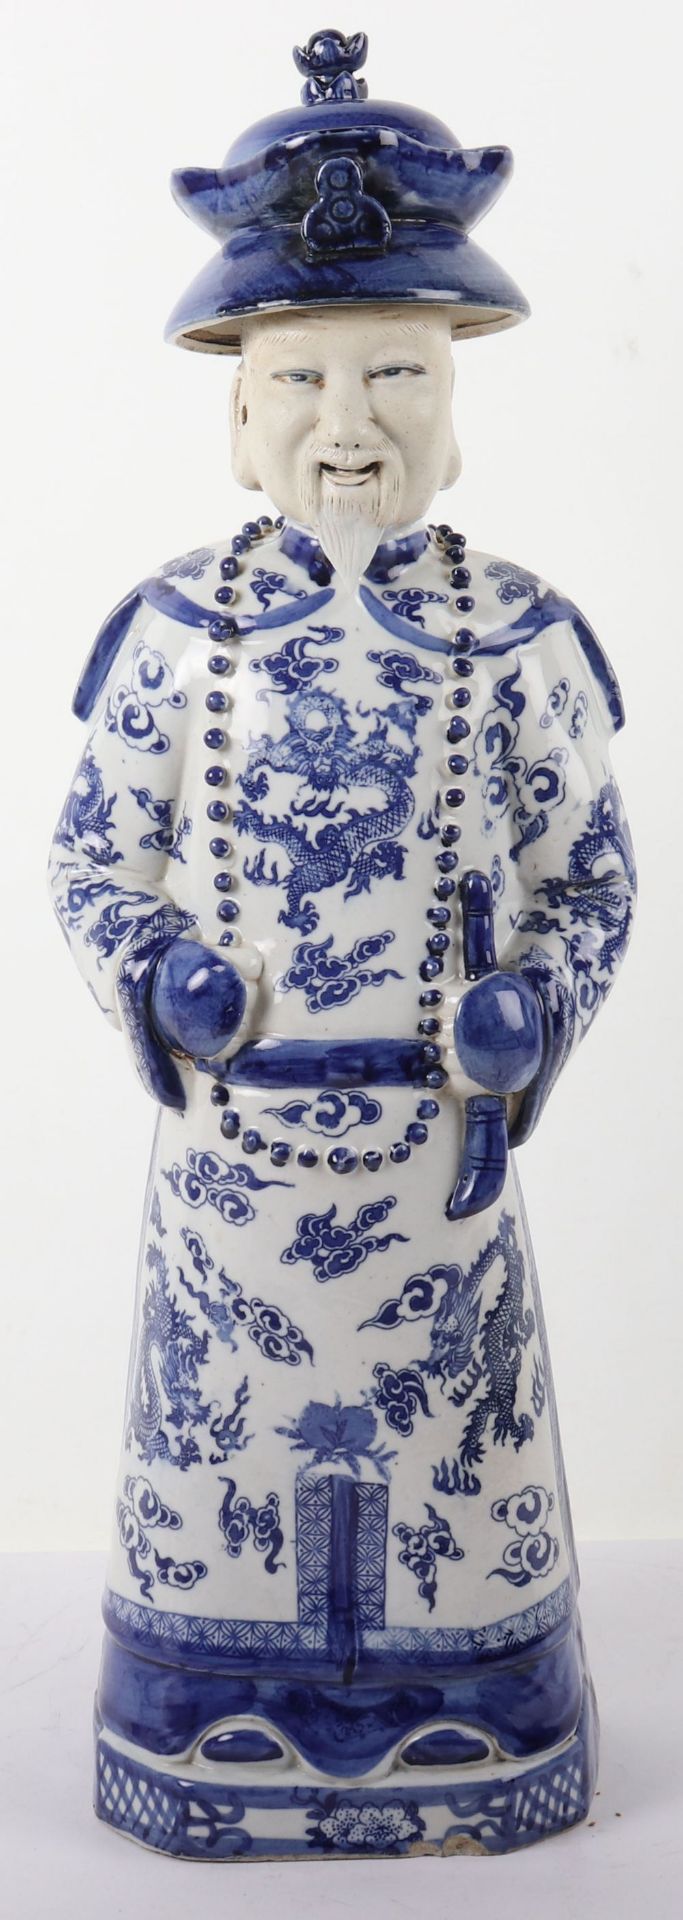 A Japanese Kyusu (teapot), Meiji period - Image 9 of 9